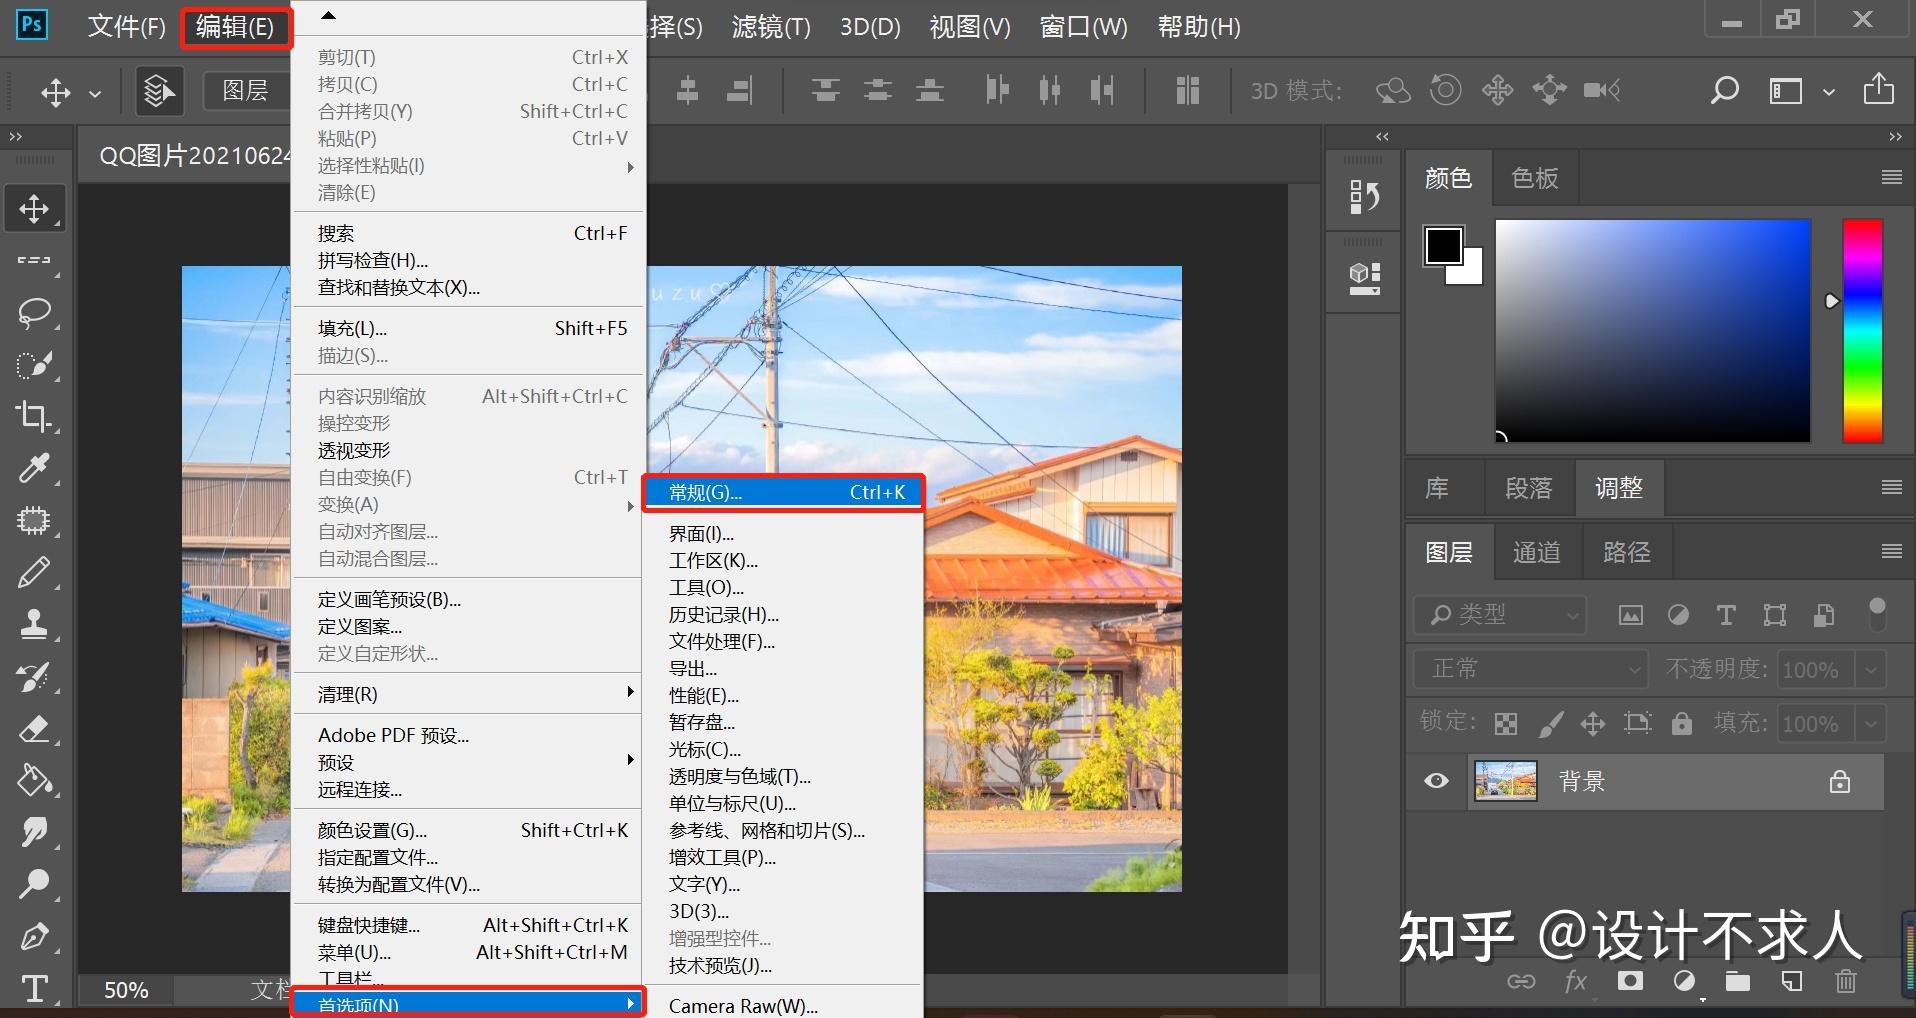 Photoshop2020教程——增加图像尺寸并增强清晰度 - 最需网